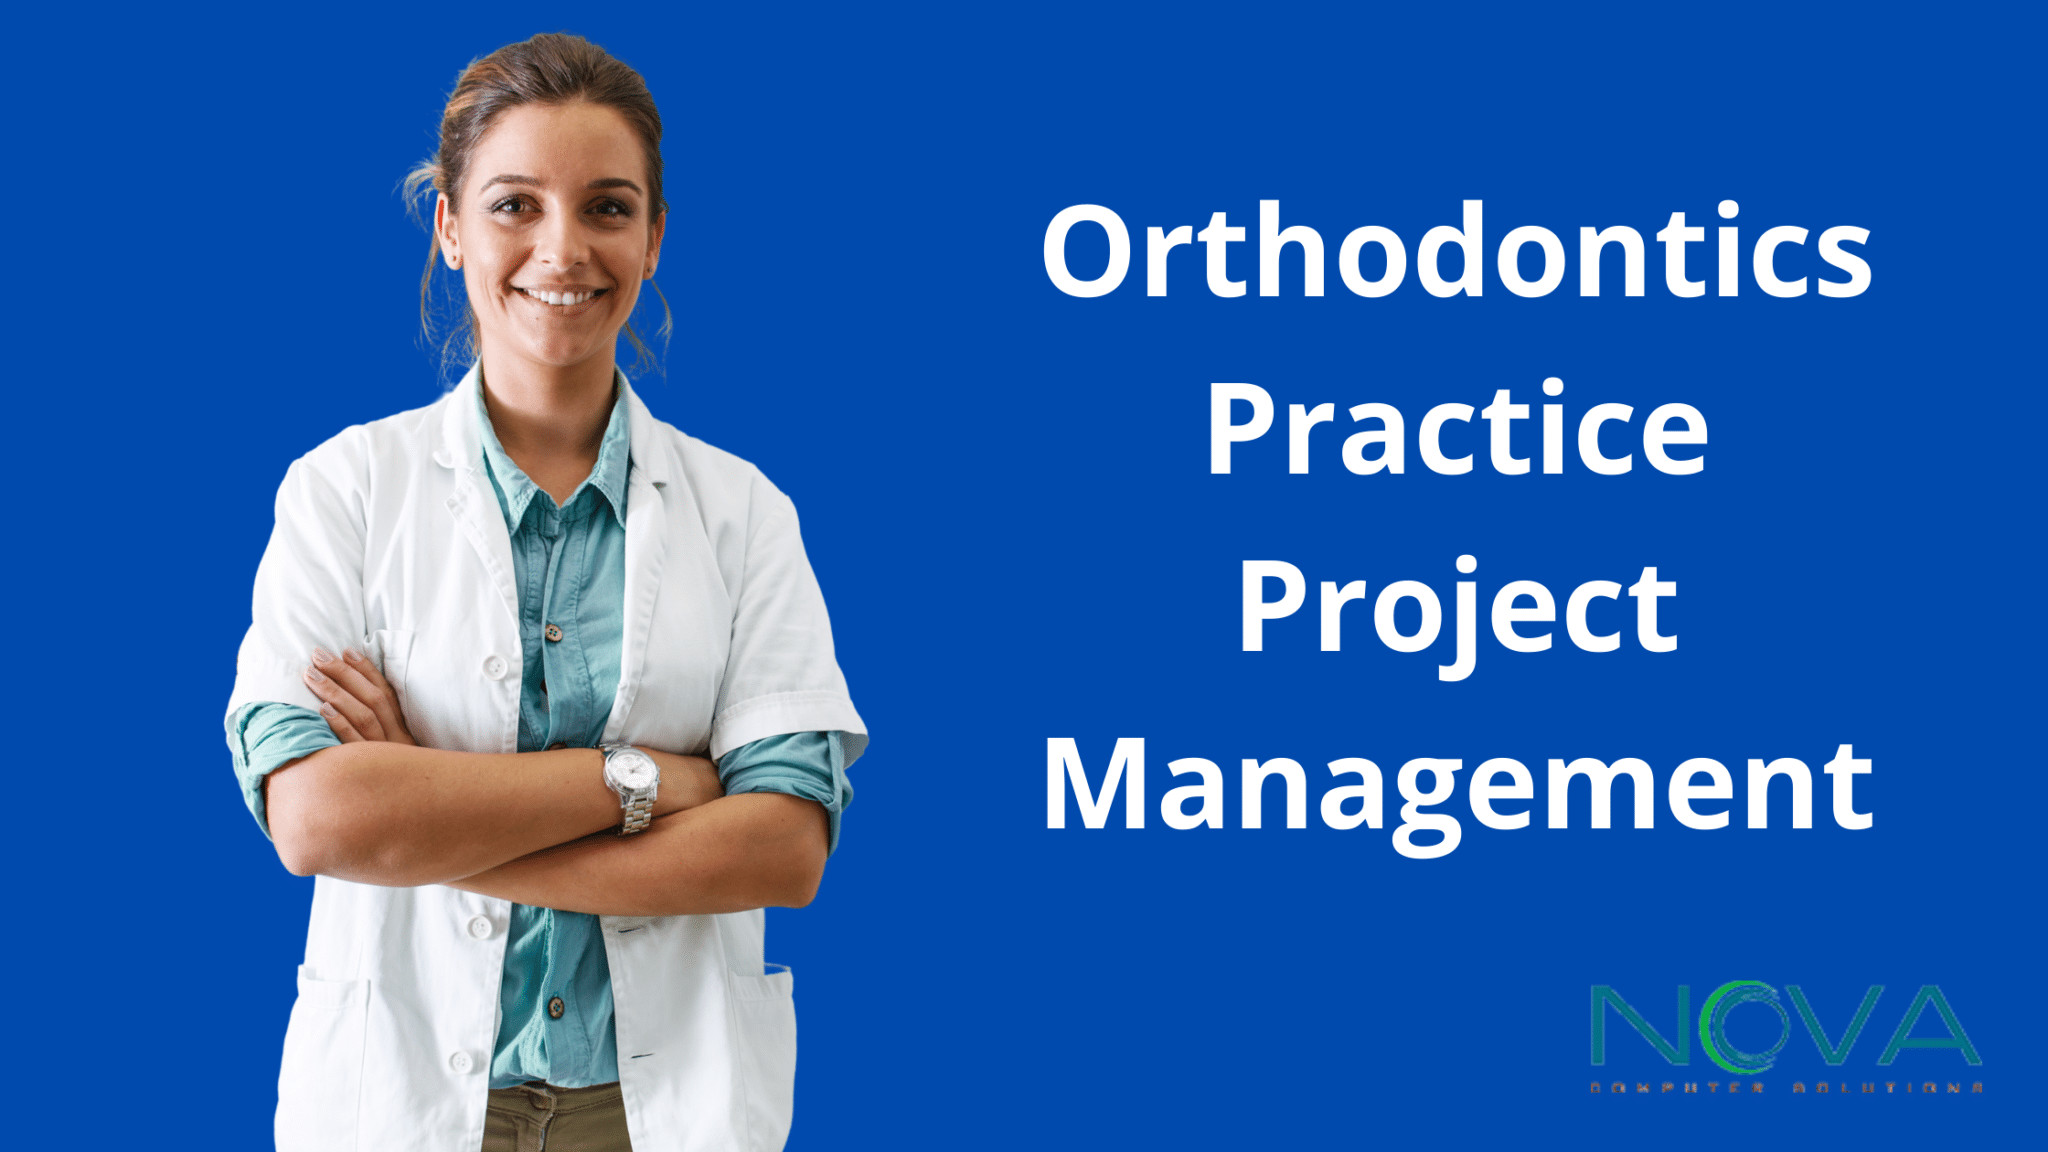 Orthodontics Practice Project Management